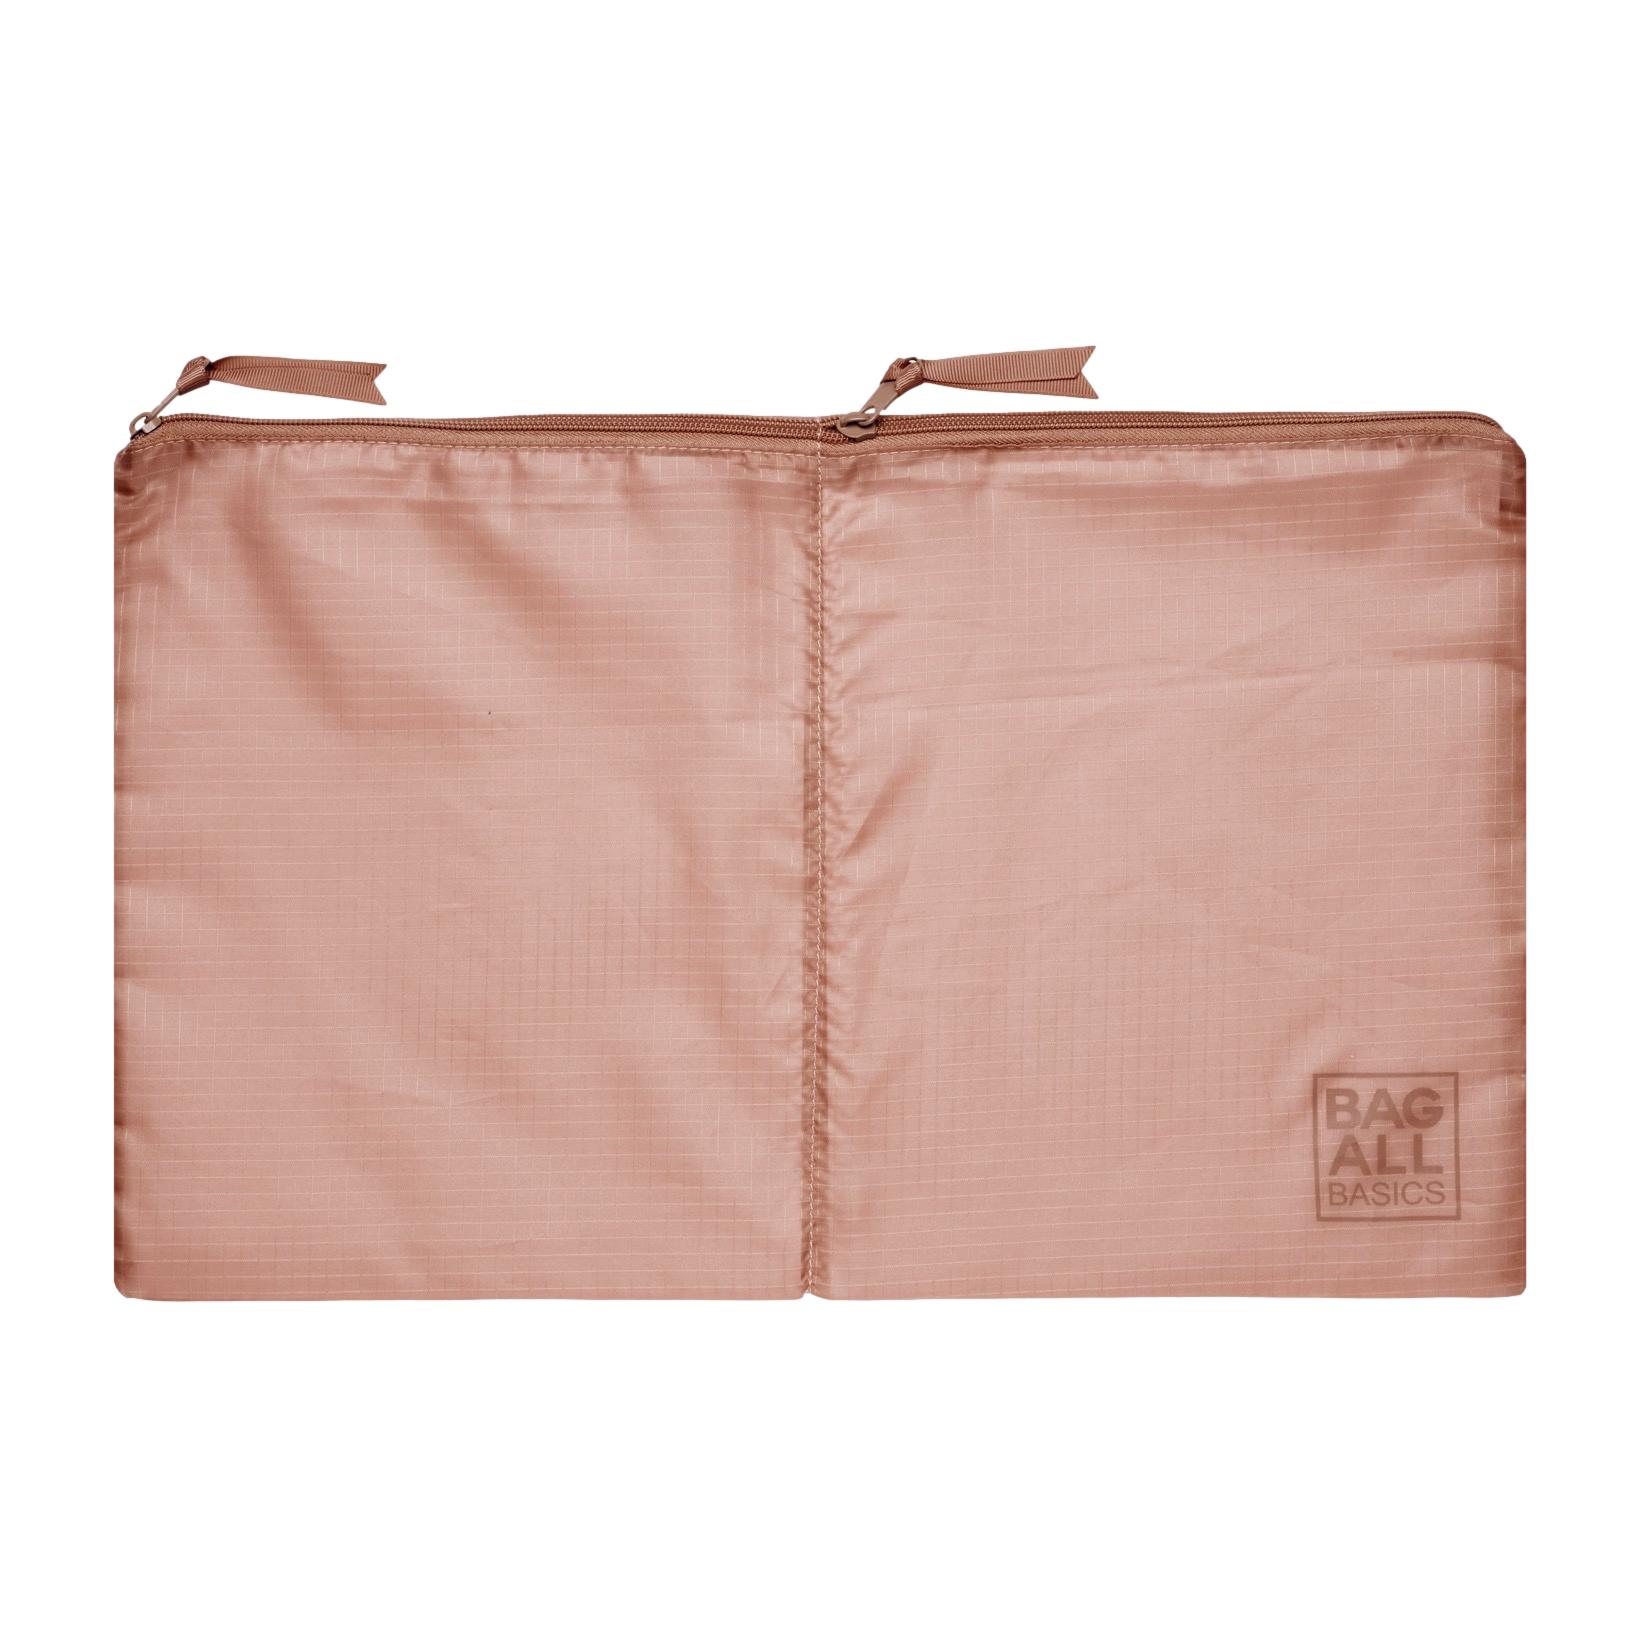 Bag-all Basic Packing Bags Set, 5-pack, Pink/Blush - Bag-all